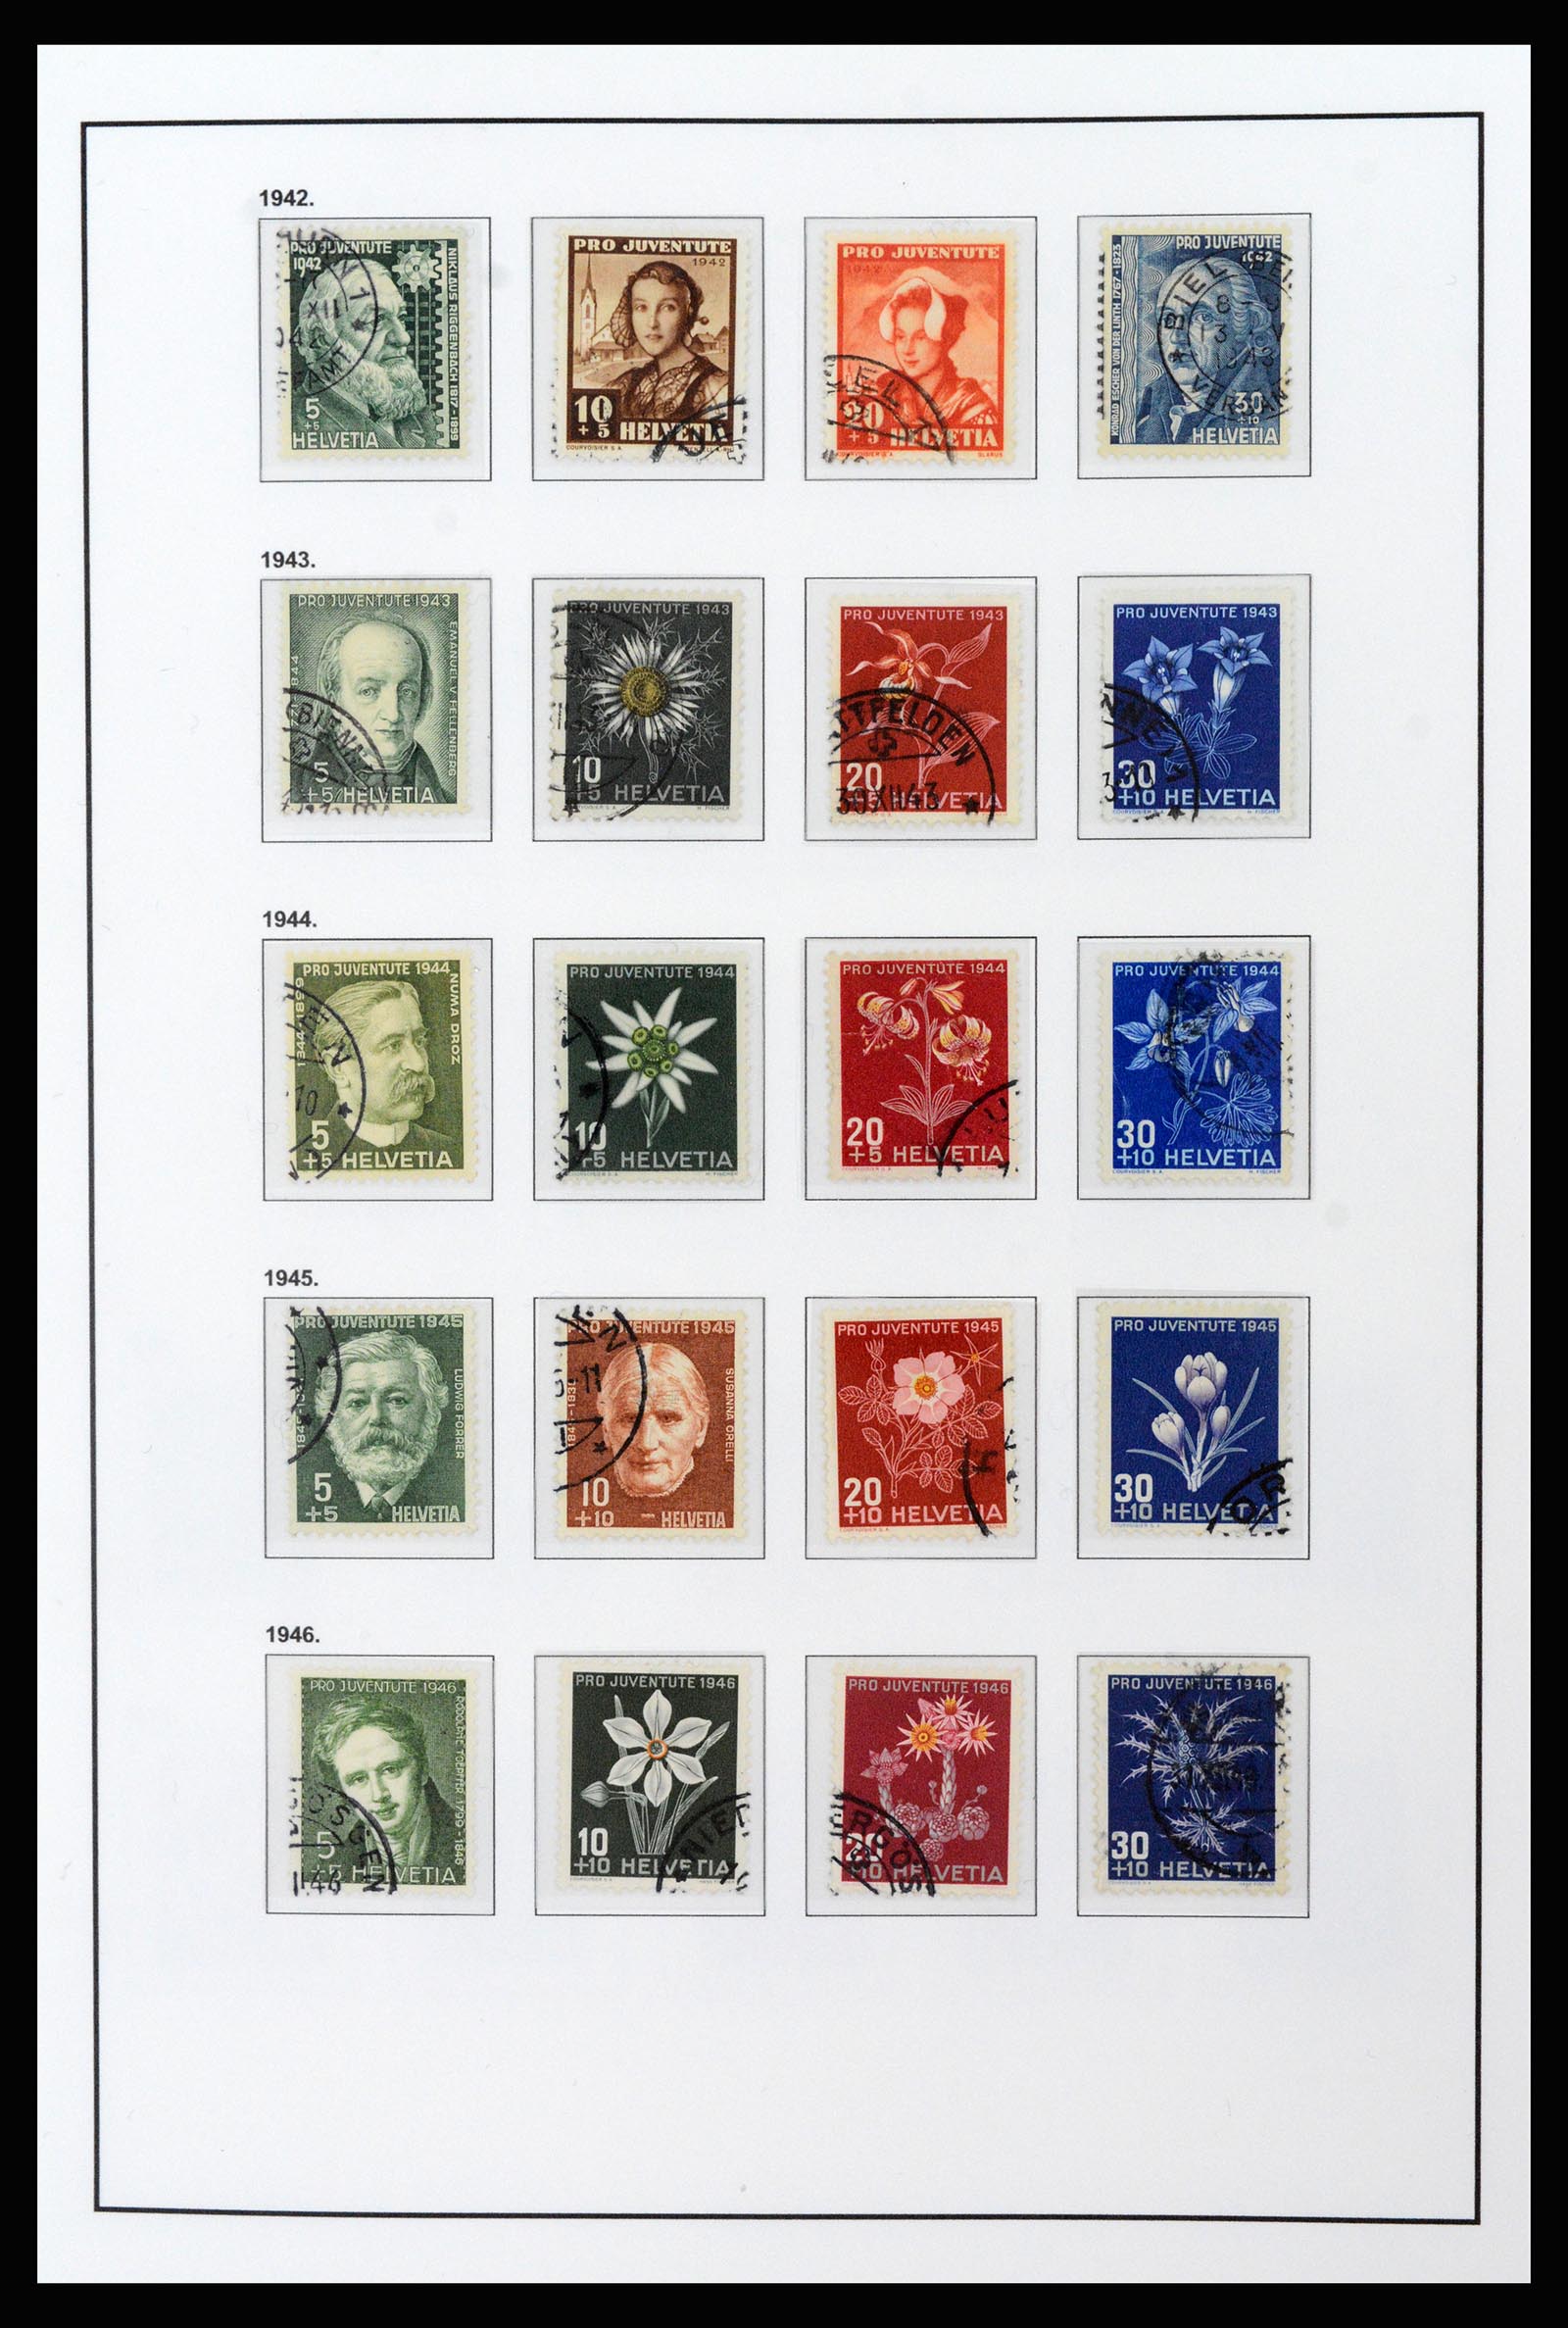 37225 061 - Stamp collection 37225 Switzerland 1854-2020.